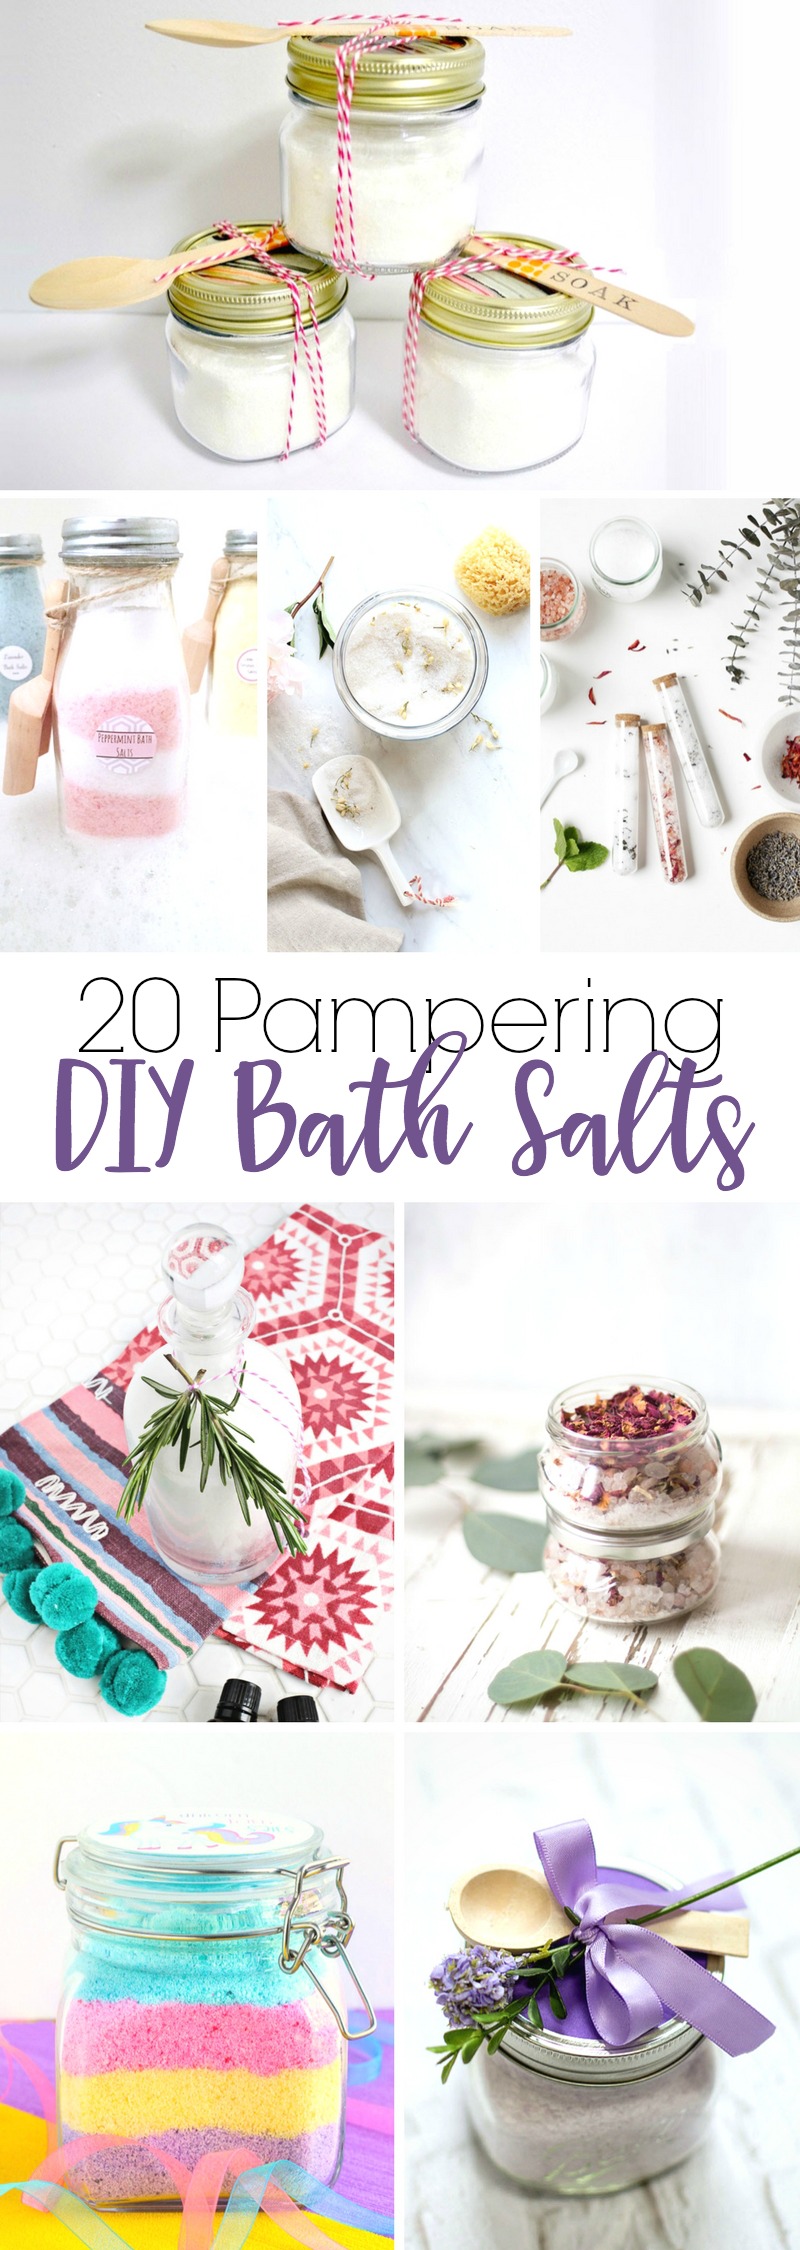 20 Pampering DIY Bath Salts